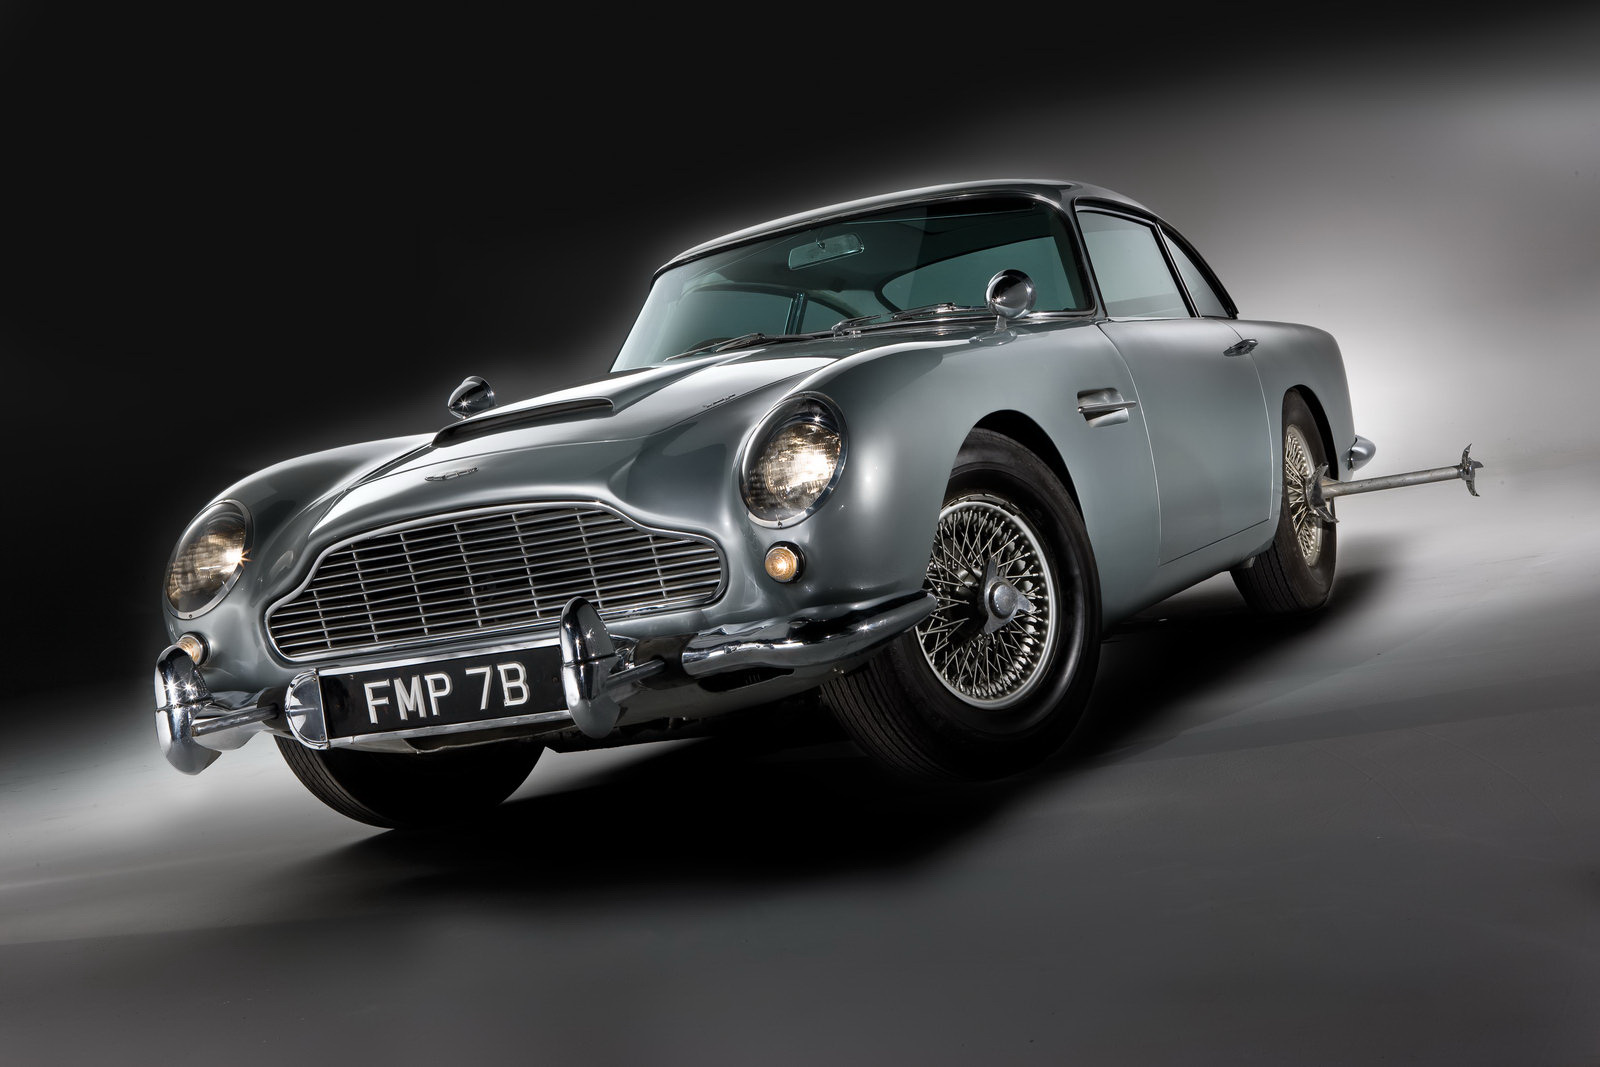 Auto Cars 2011 2012: James Bond's Original '007' Aston 